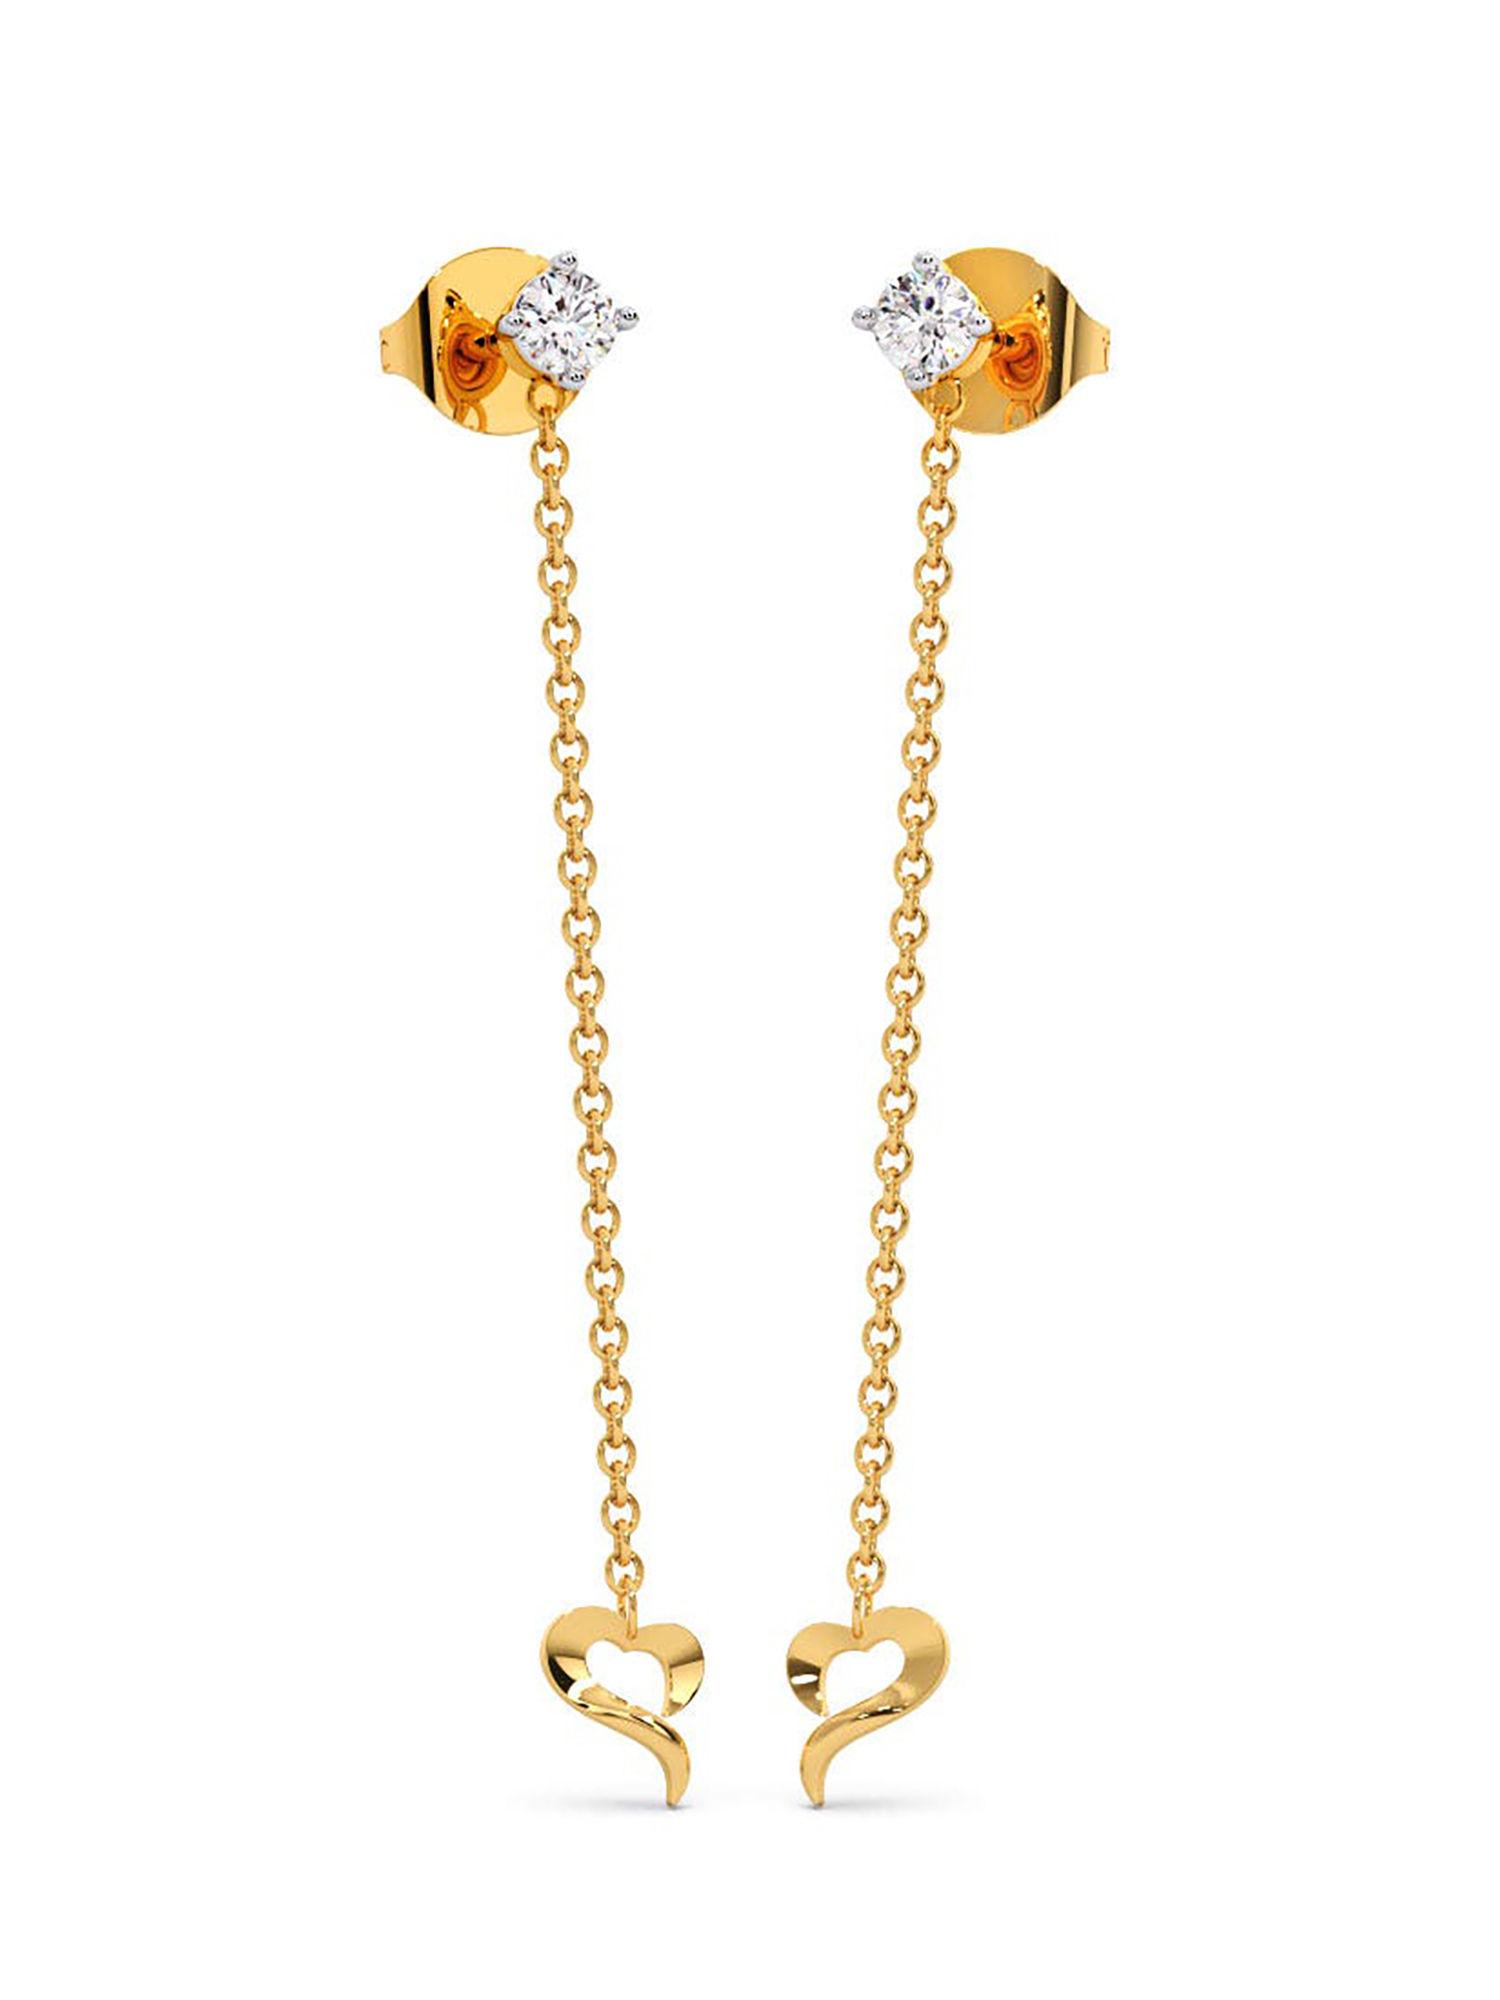 18k (750) bis hallmark yellow gold & certified diamond earring for women